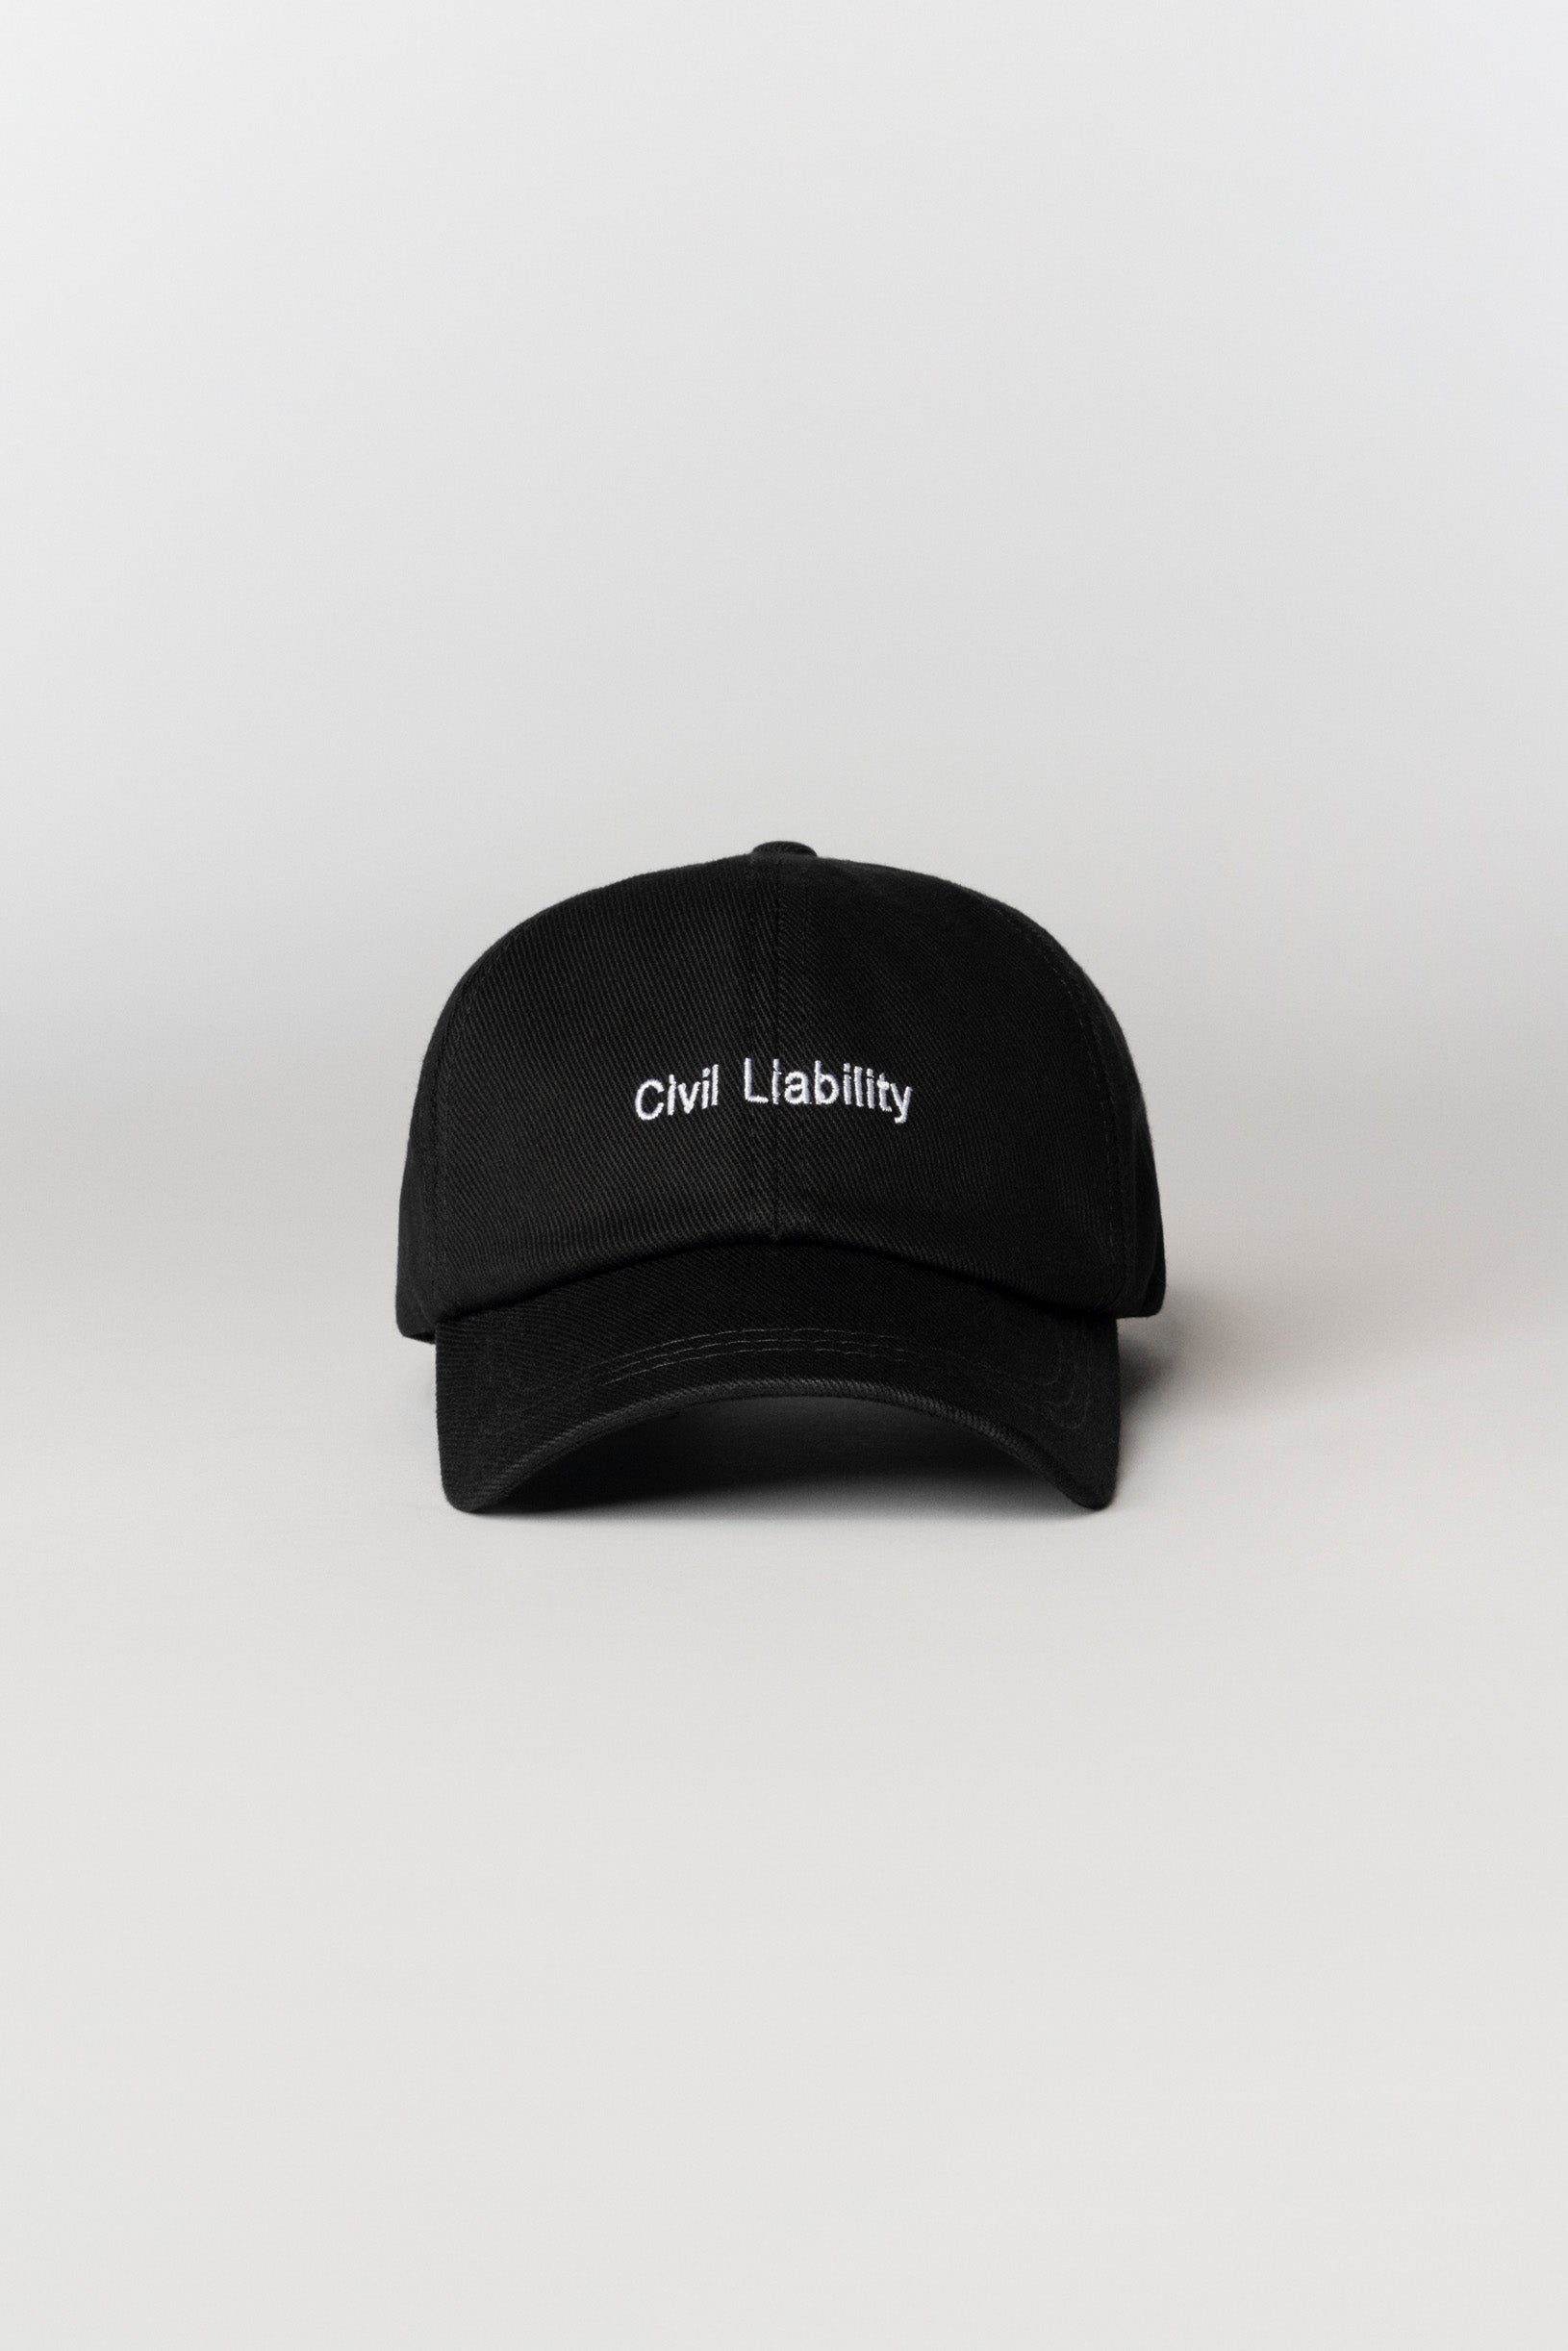 Civil Liability cap